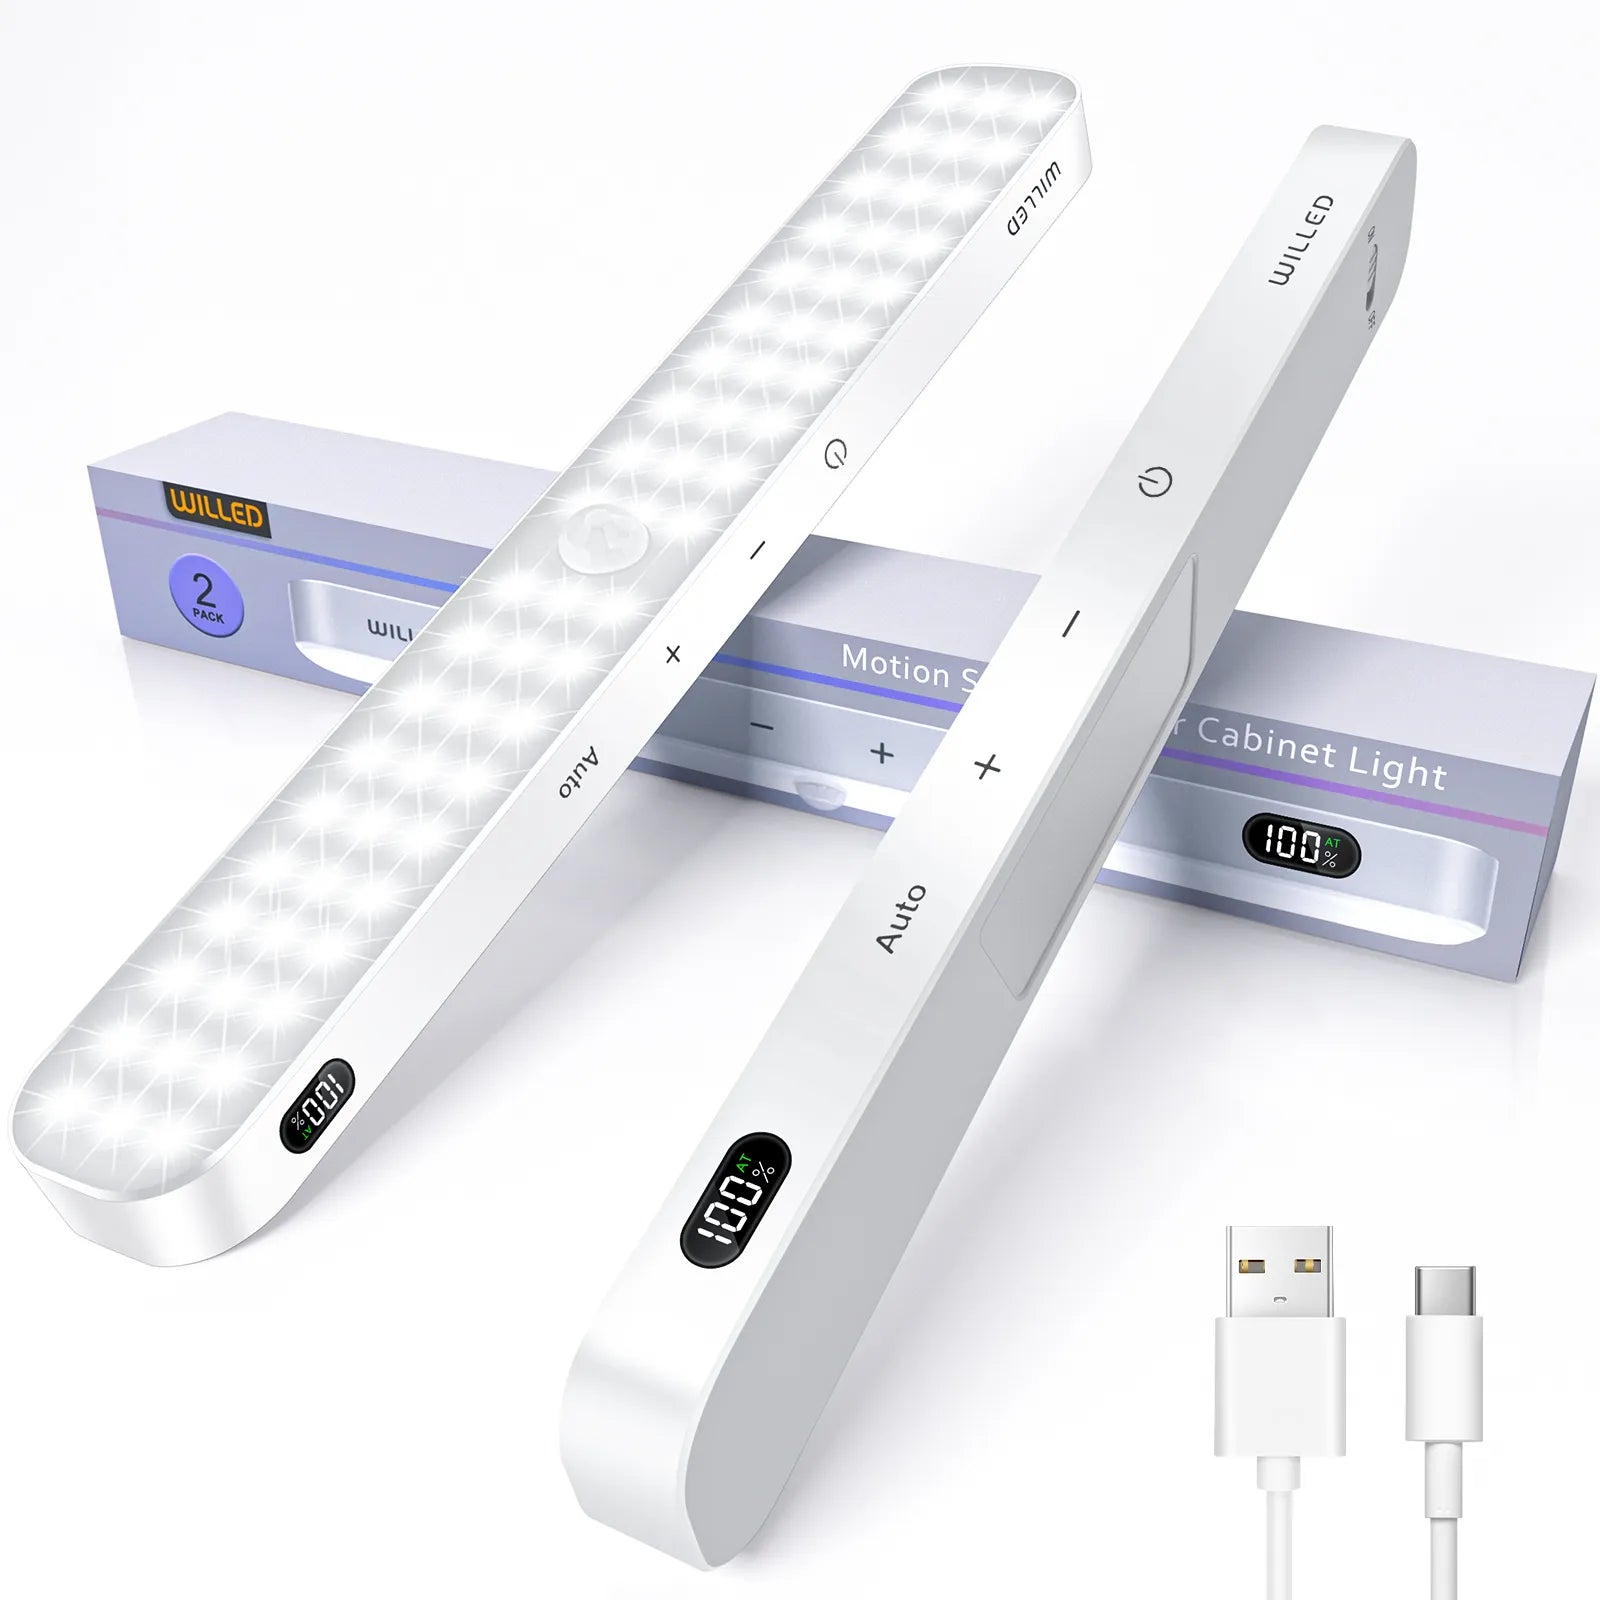 LED Motion Sensor Night Light: Wireless Rechargeable Cabinet Light  ourlum.com Cabinet Light 2PCS  